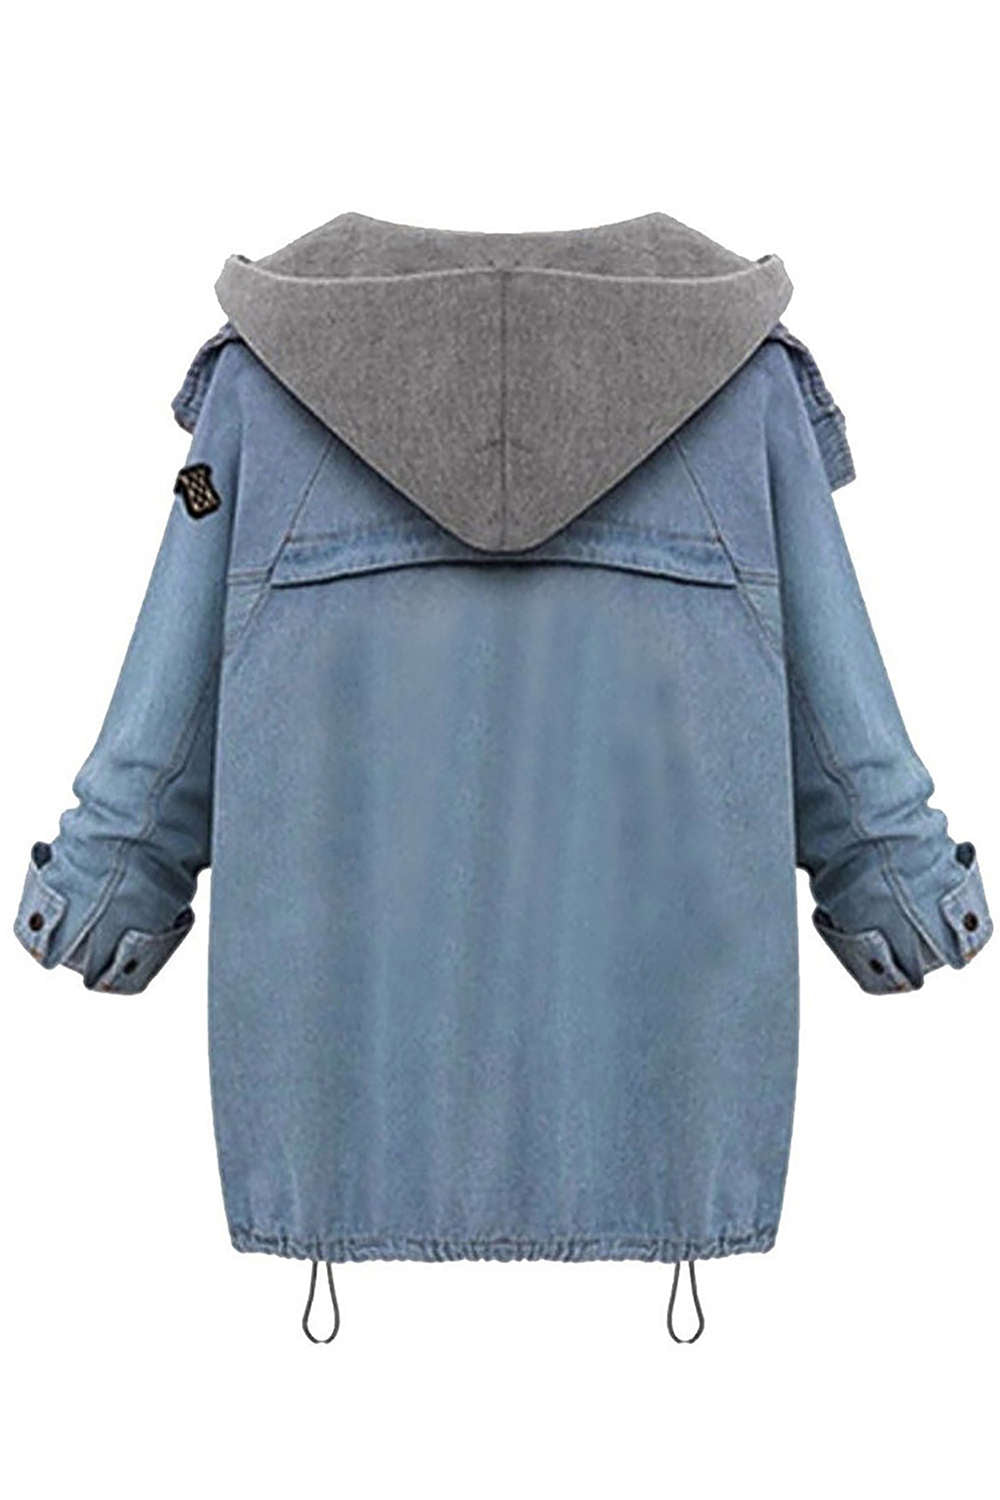 Iyasson Women's Two-piece Blue Denim Coat with Hoodie Vest 